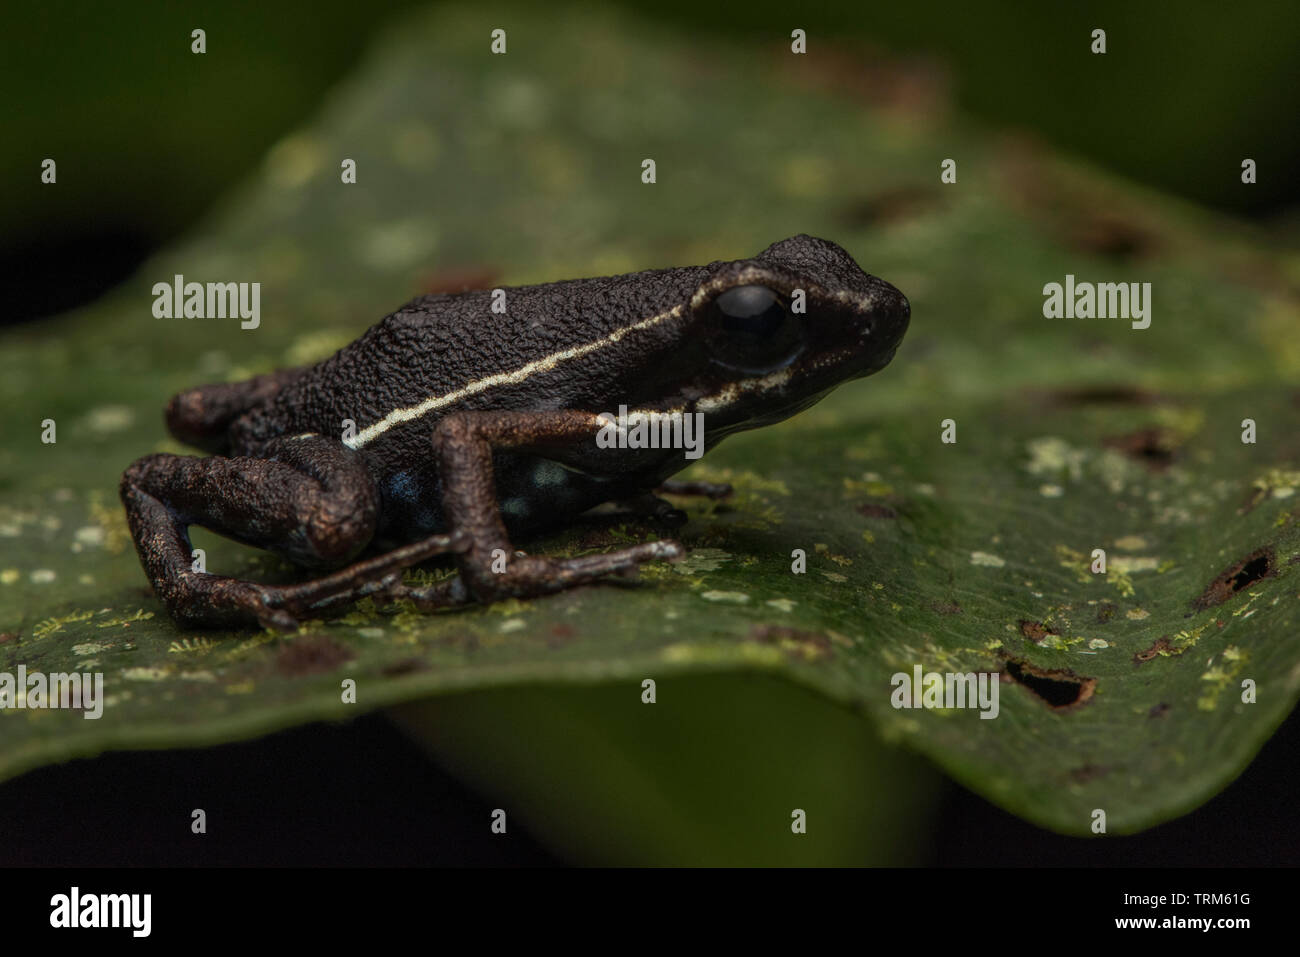 A Hahnel's poison frog (Ameerega hahneli) from the Amazon basin in Ecuador. Stock Photo